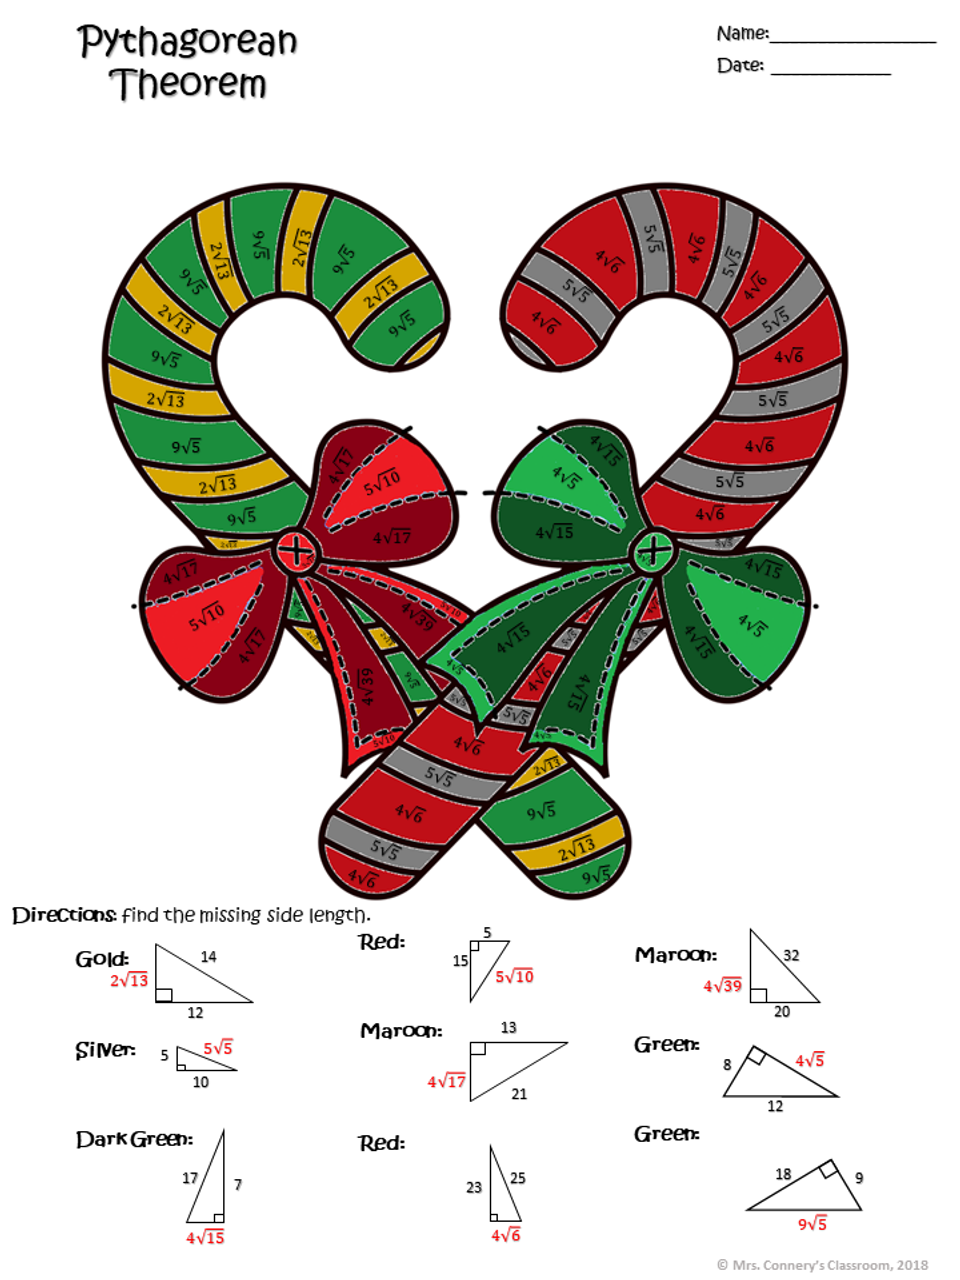 Christmasholiday geometry color sheets congruence pythagorean thm etc